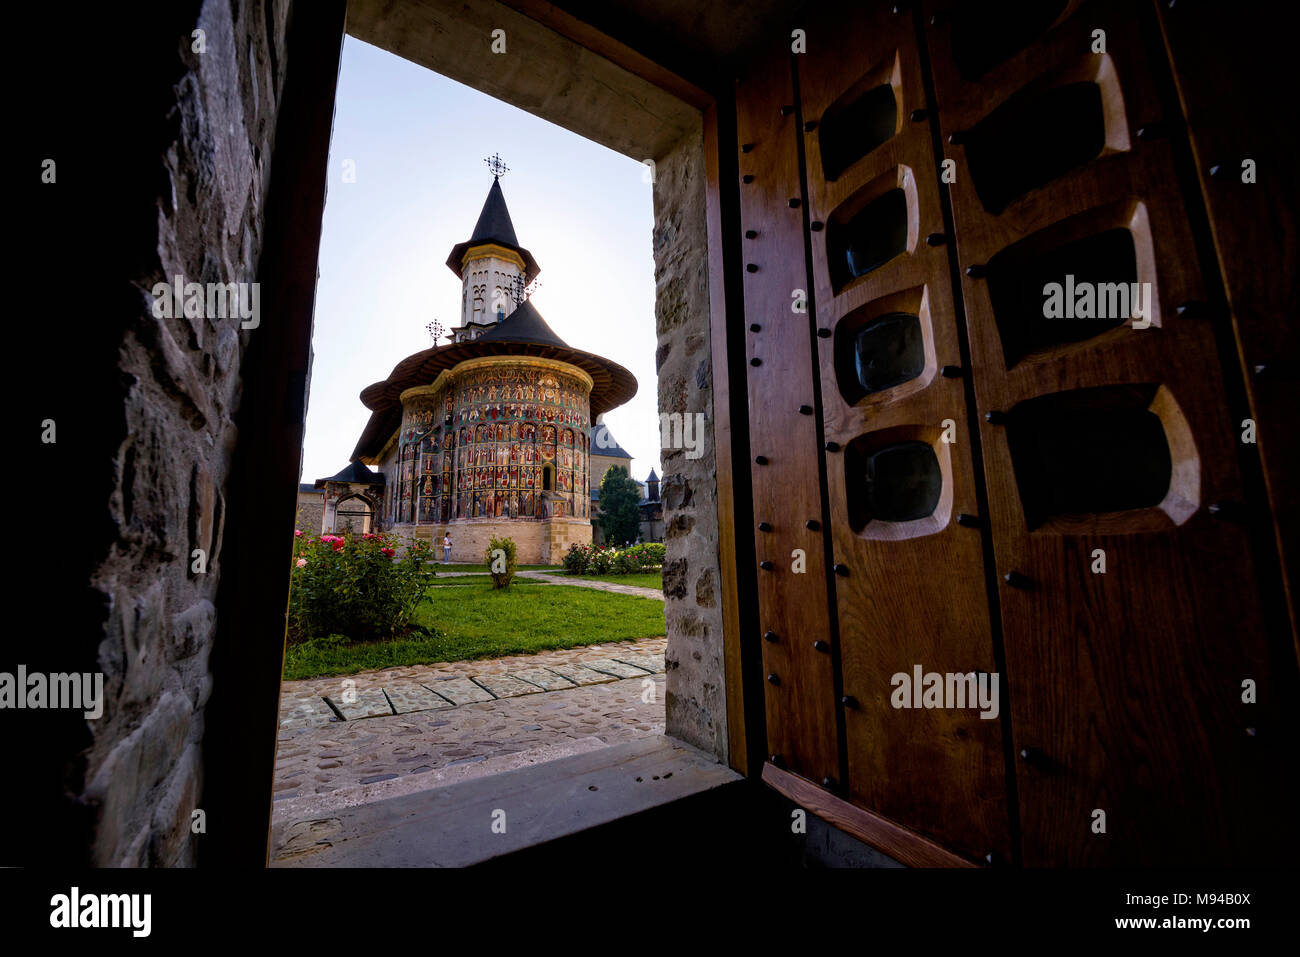 Painted church monastery of Bucovina region in Romania seen through a doorway Stock Photo